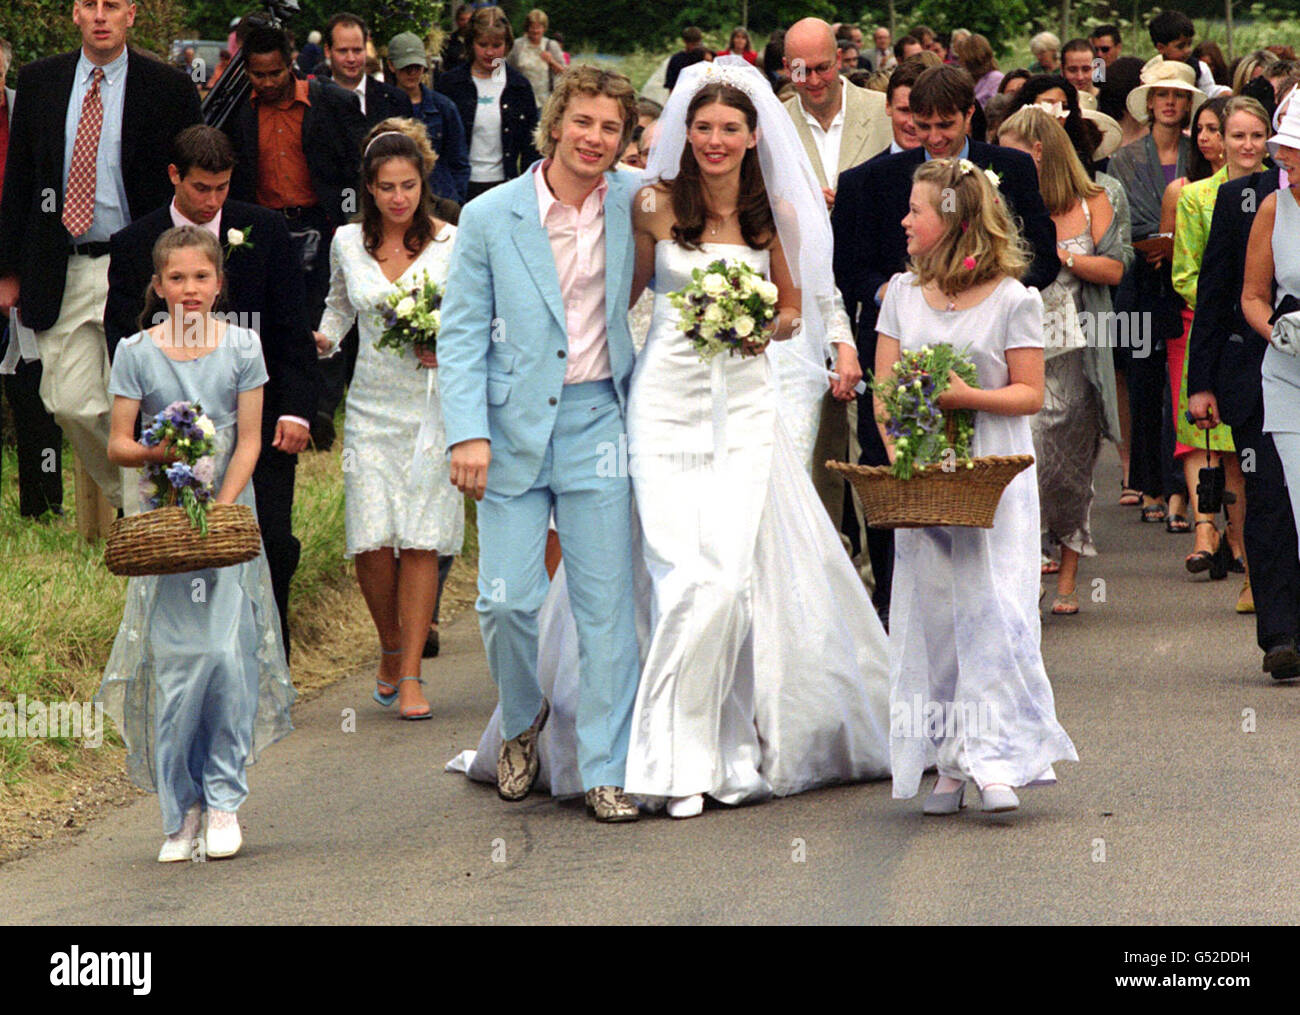 Jamie Oliver wedding bride Stock Photo - Alamy